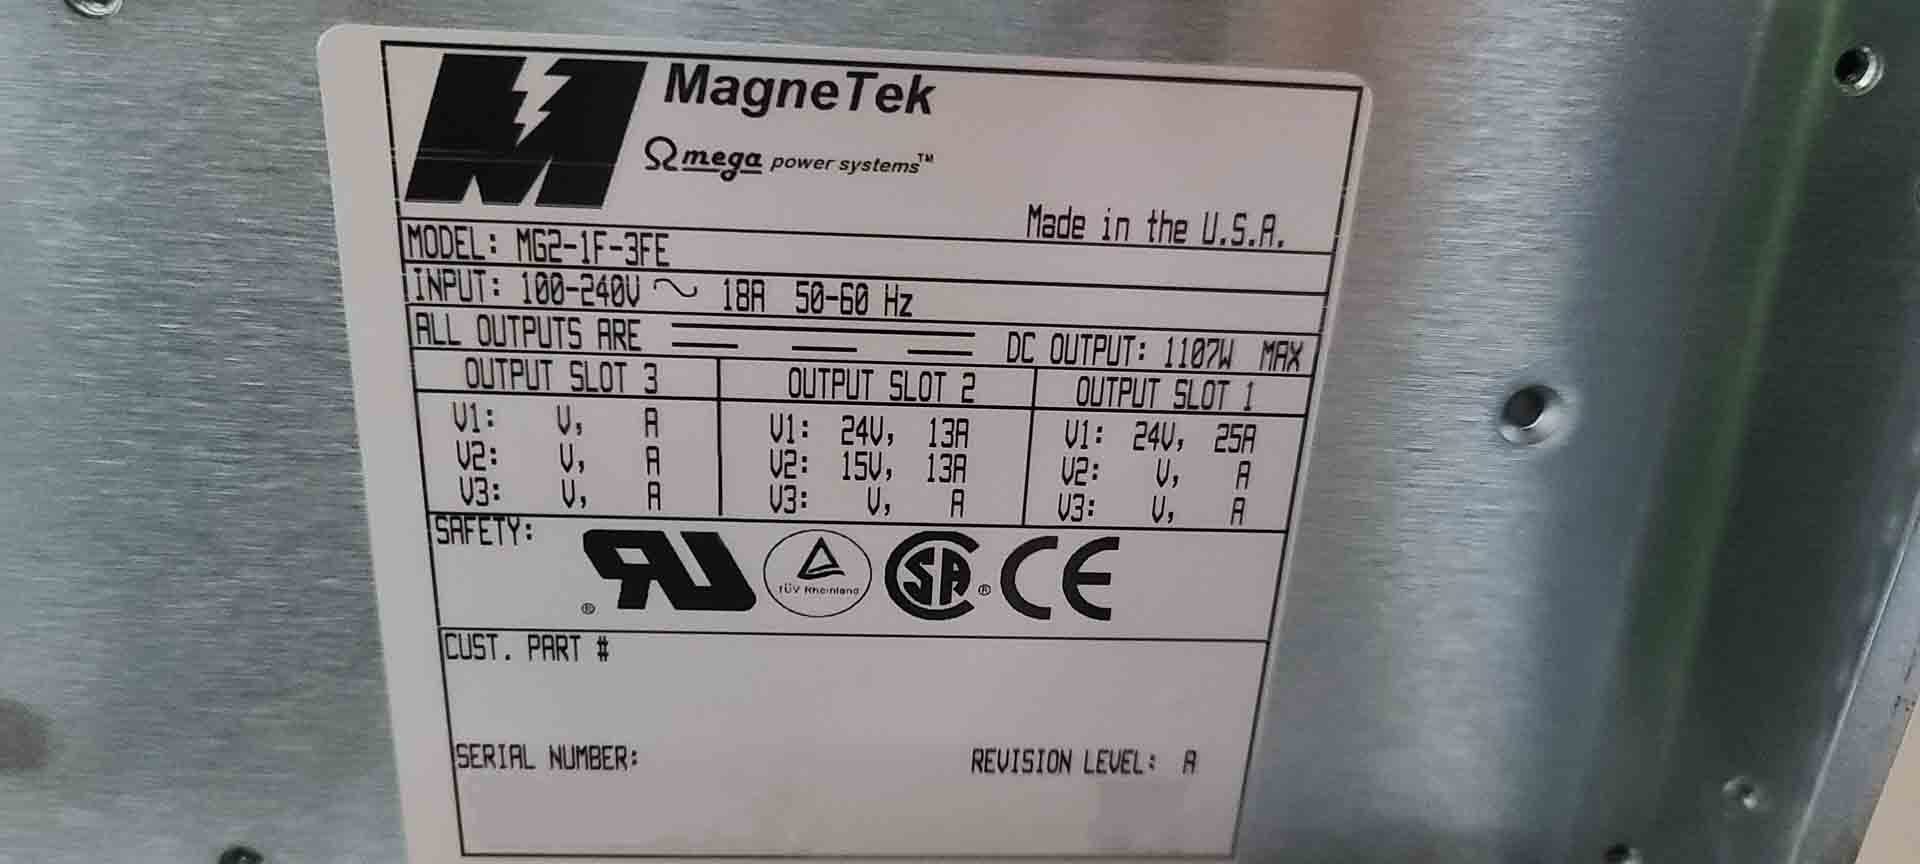 Photo Used MAGNETEK MG2-1F-3FE For Sale